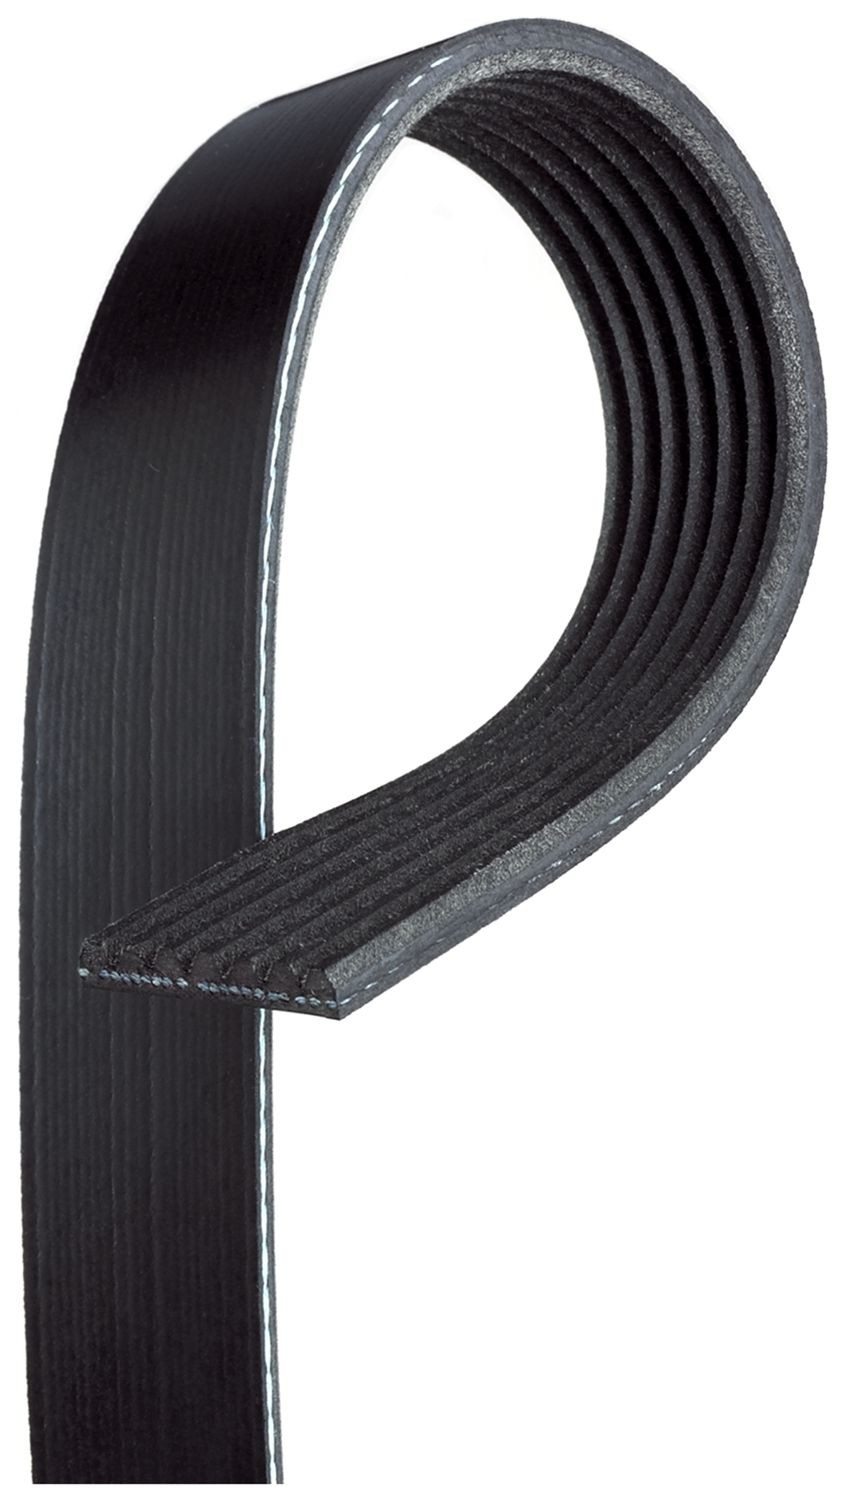 GATES 7PK2005 Serpentine belt 2005mm, 7, G-Force™ C12™ CVT Belt